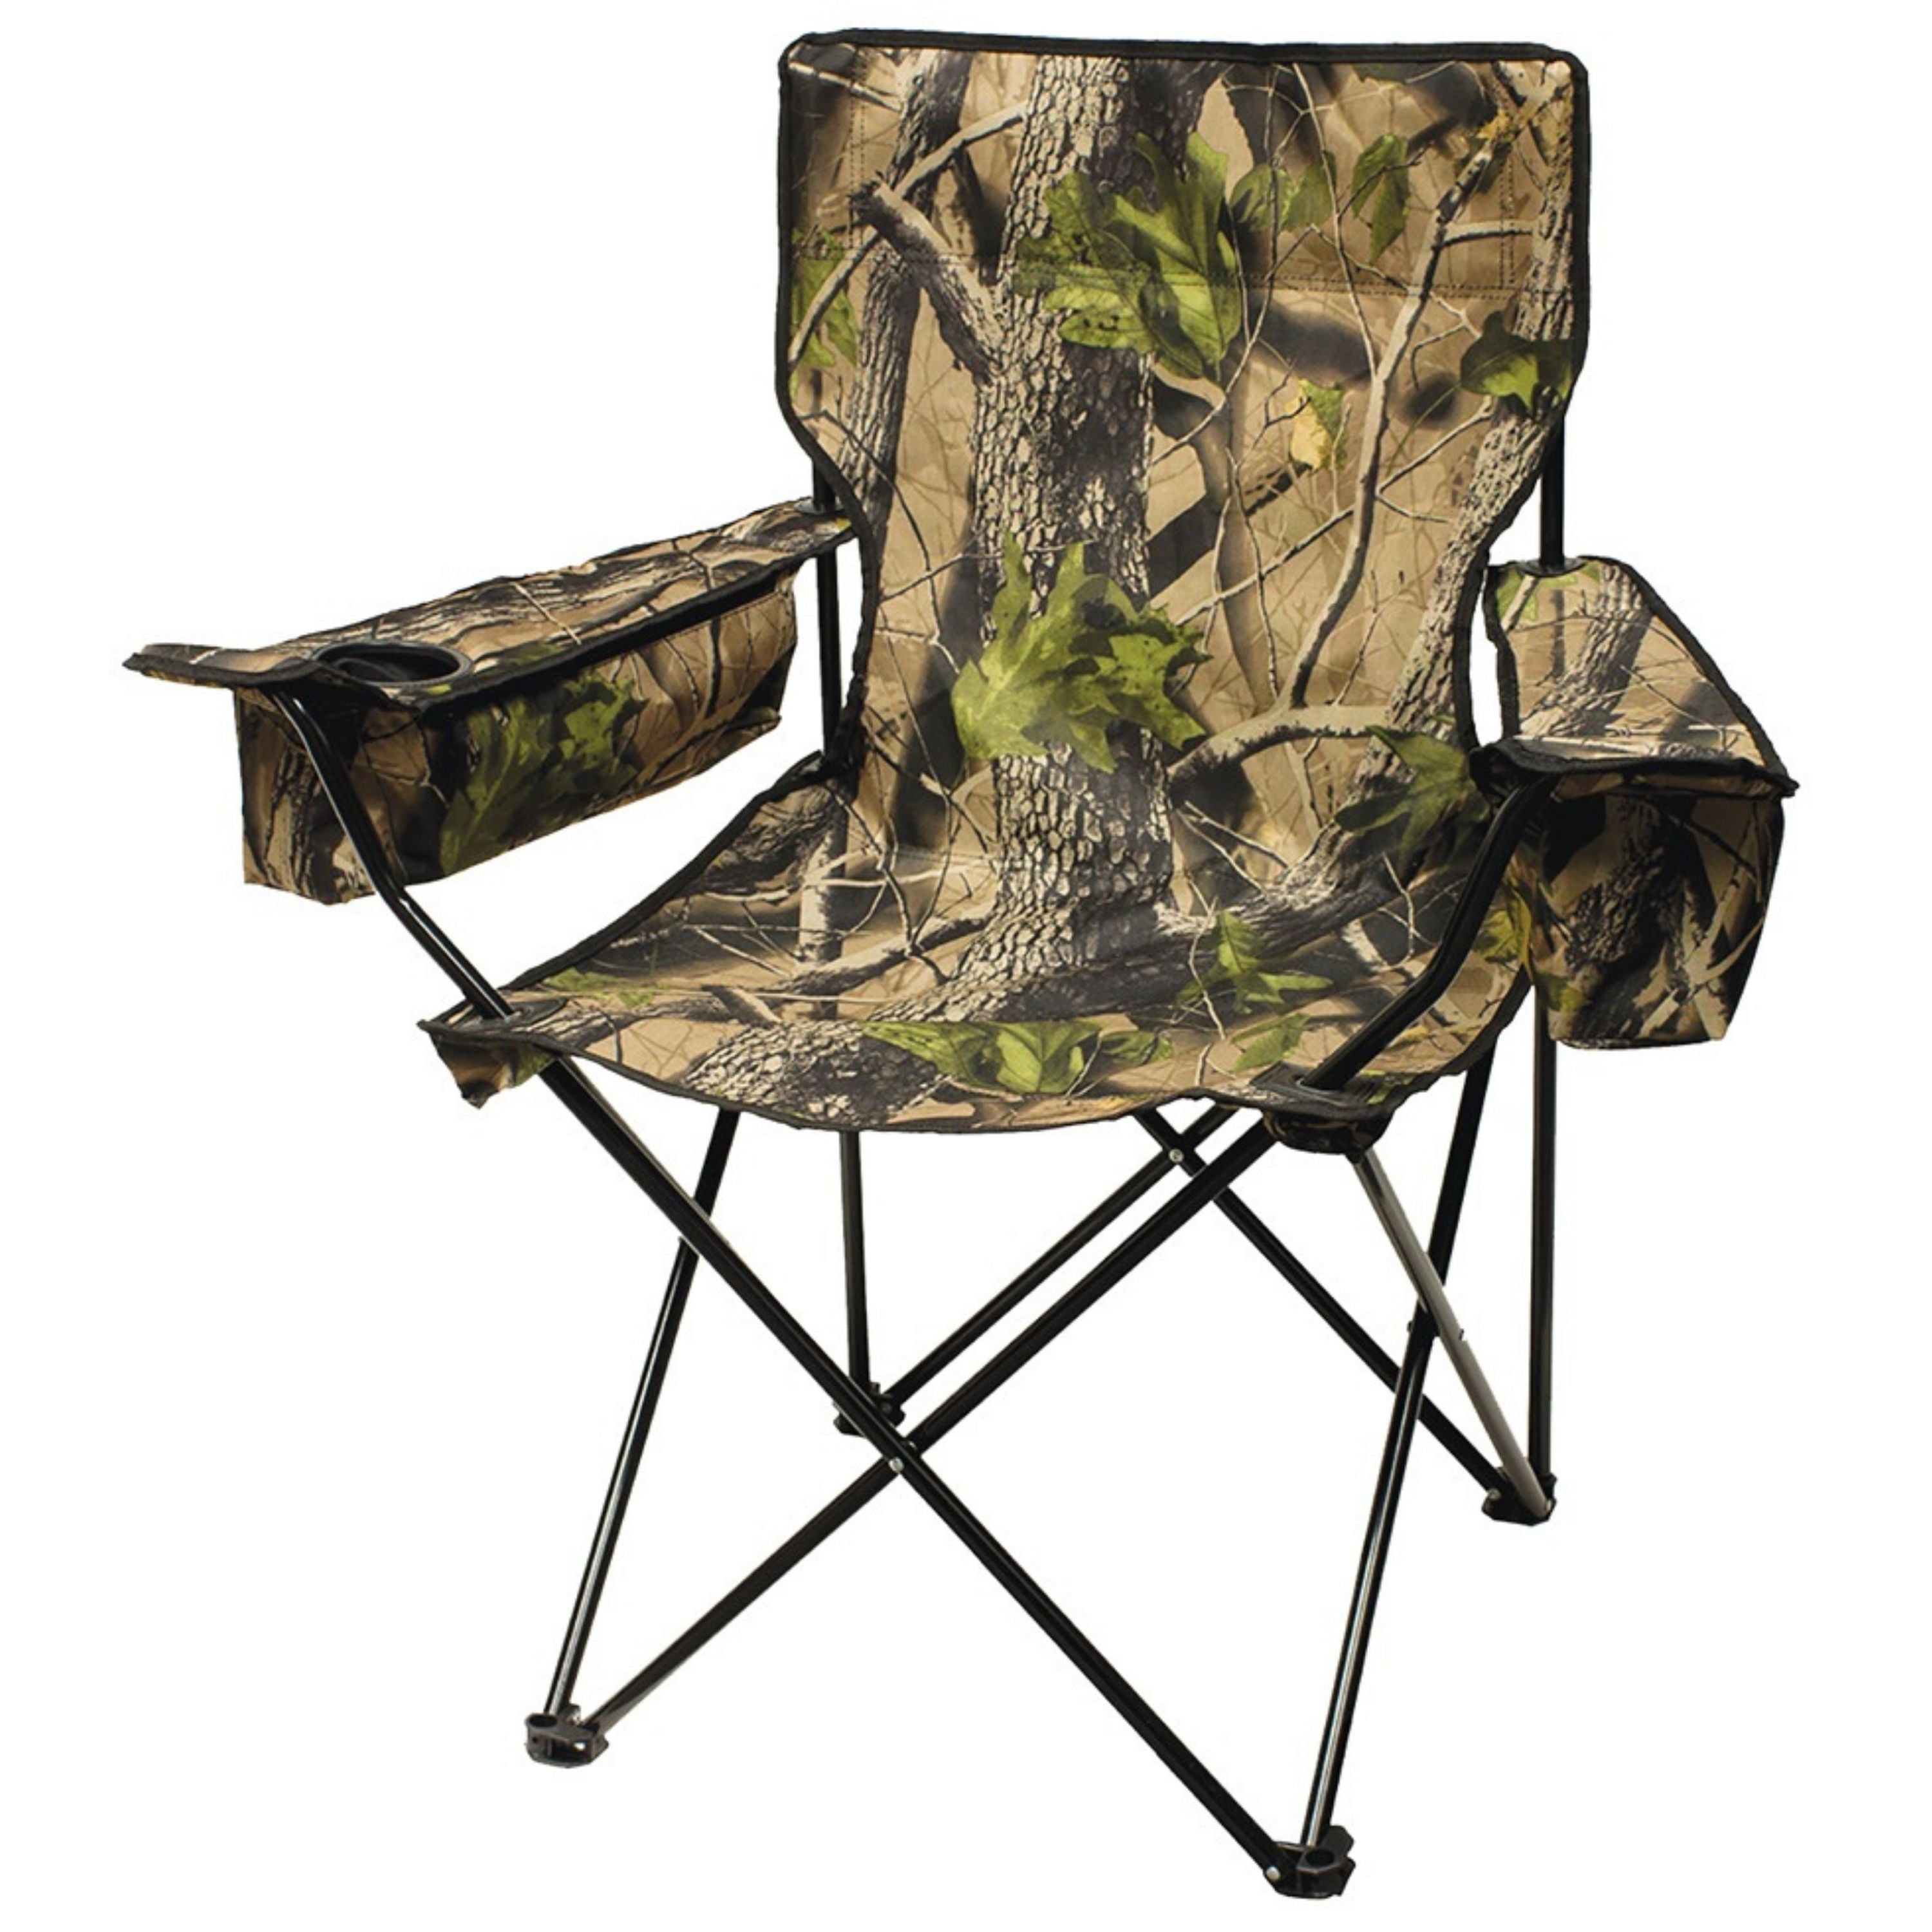 "Uniflage" folding chair